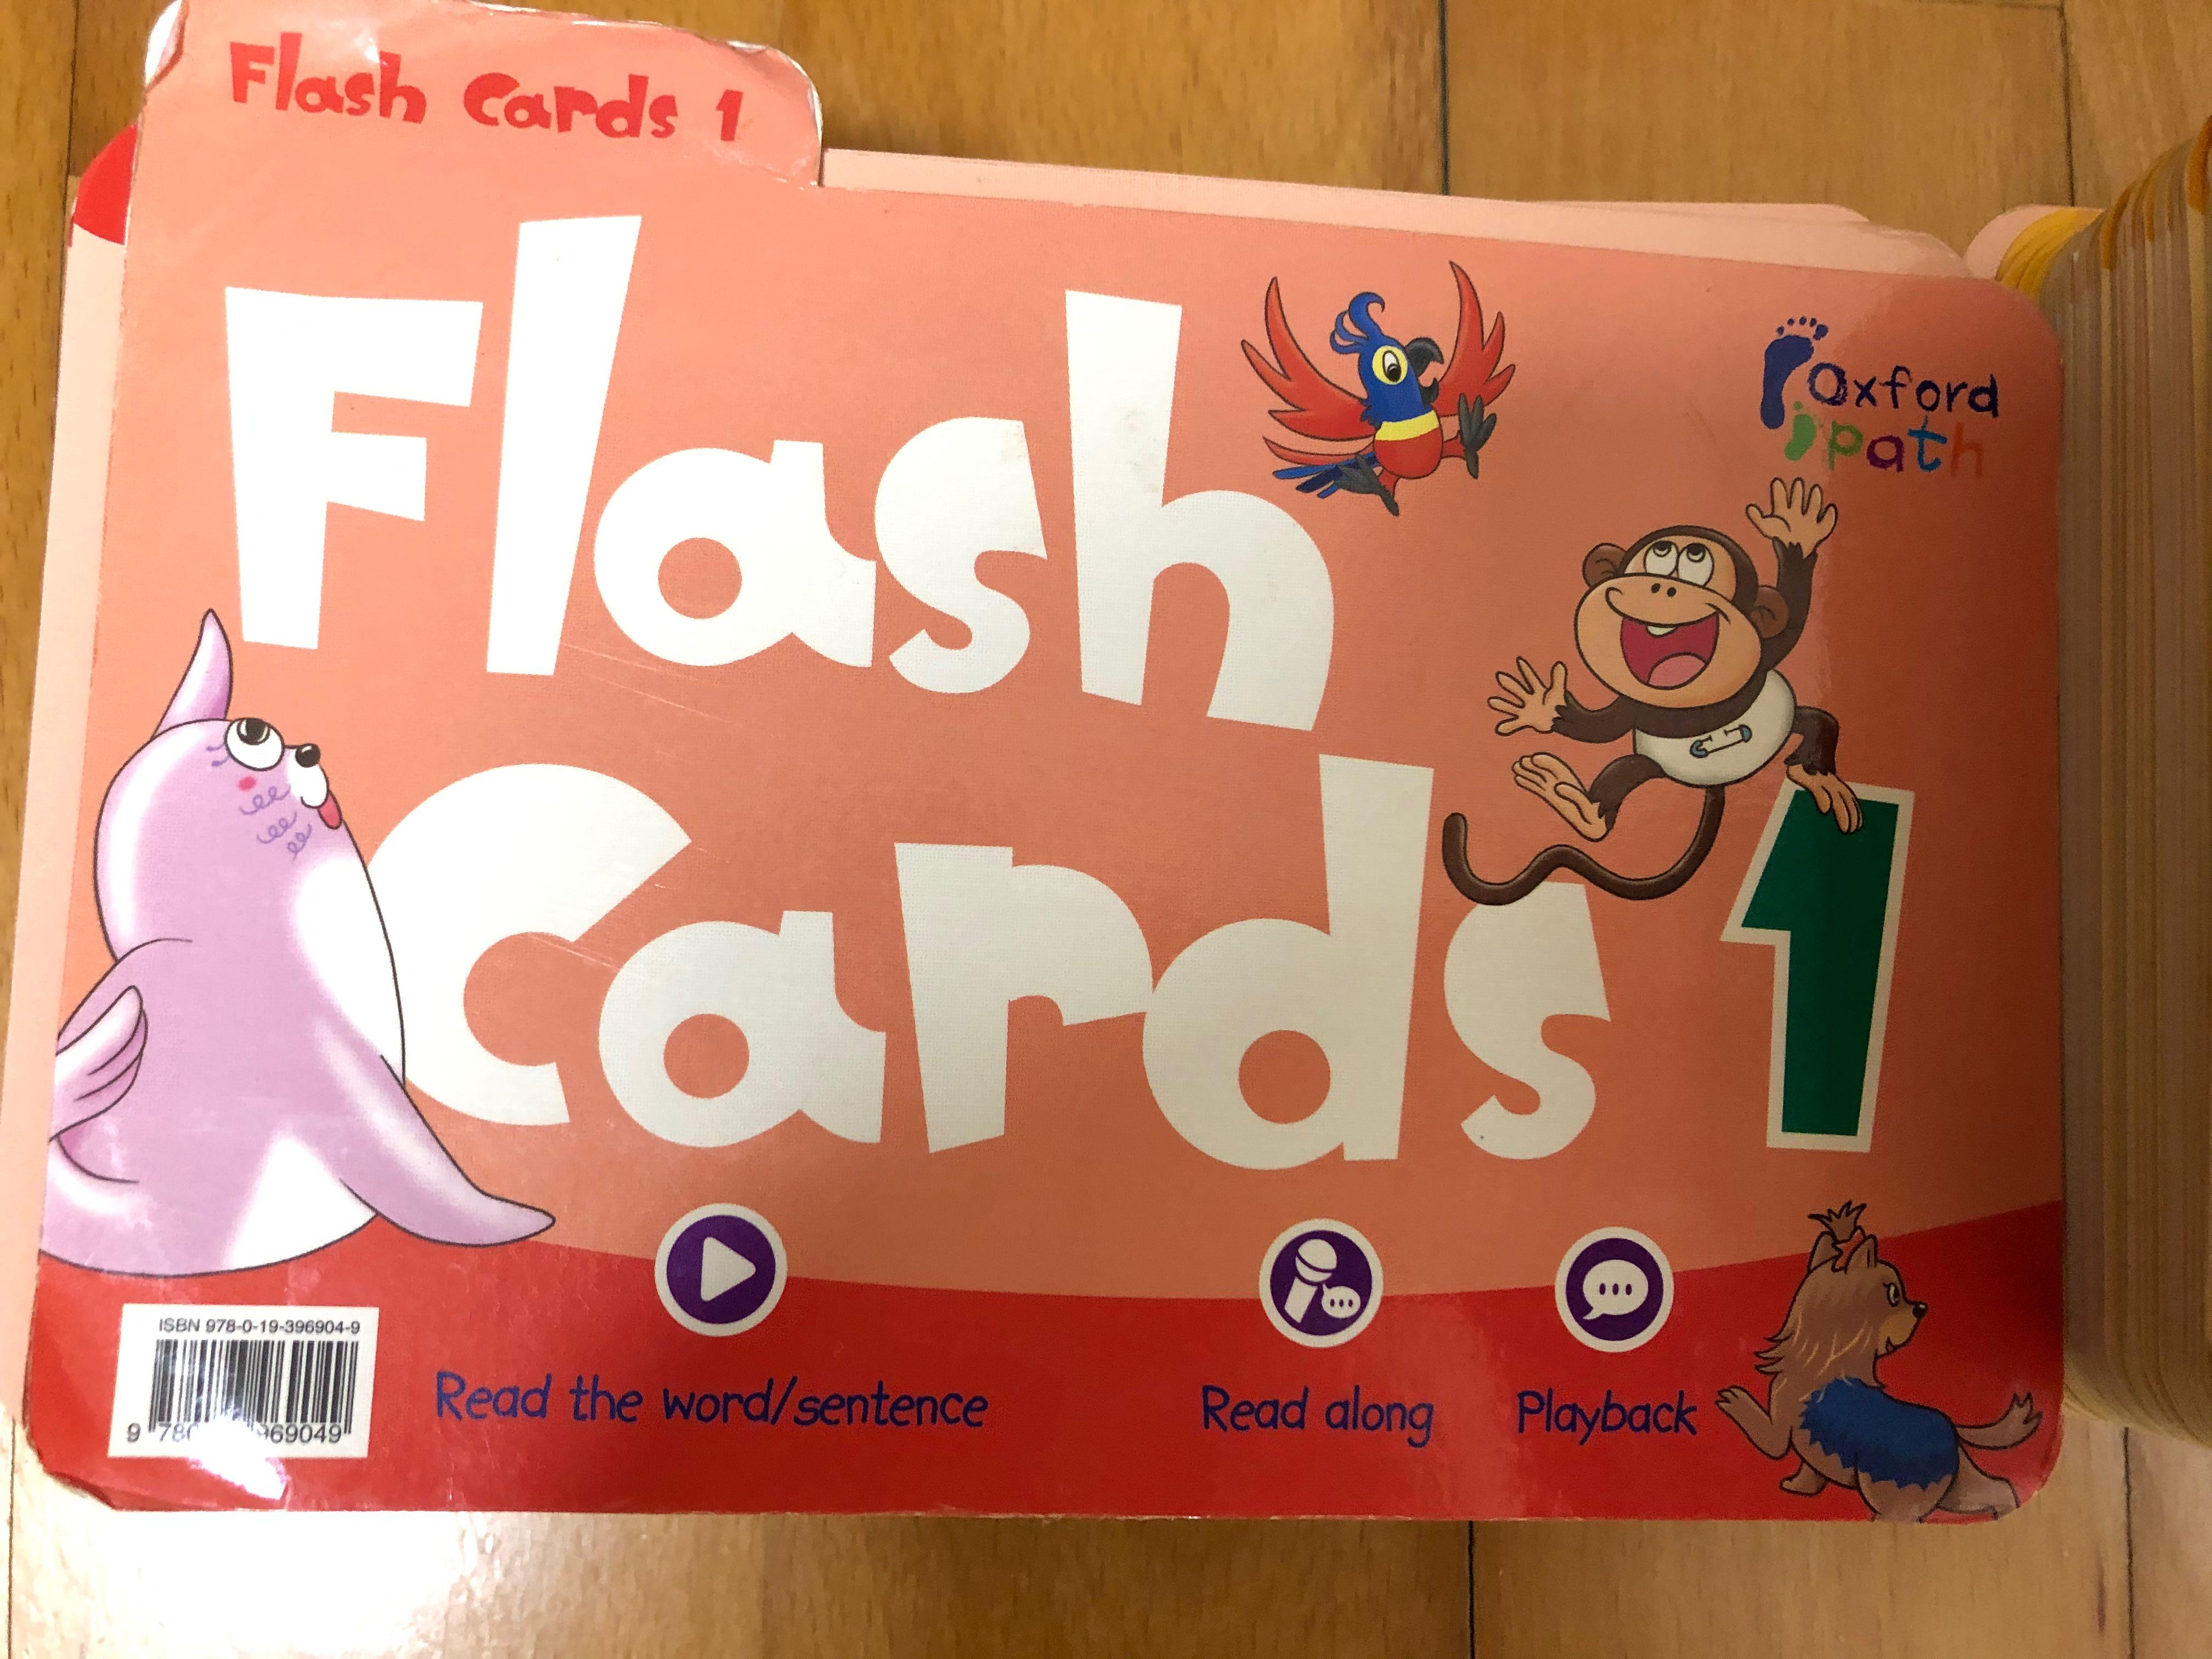 Oxford Path flash cards, 興趣及遊戲, 書本& 文具, 小說& 故事書